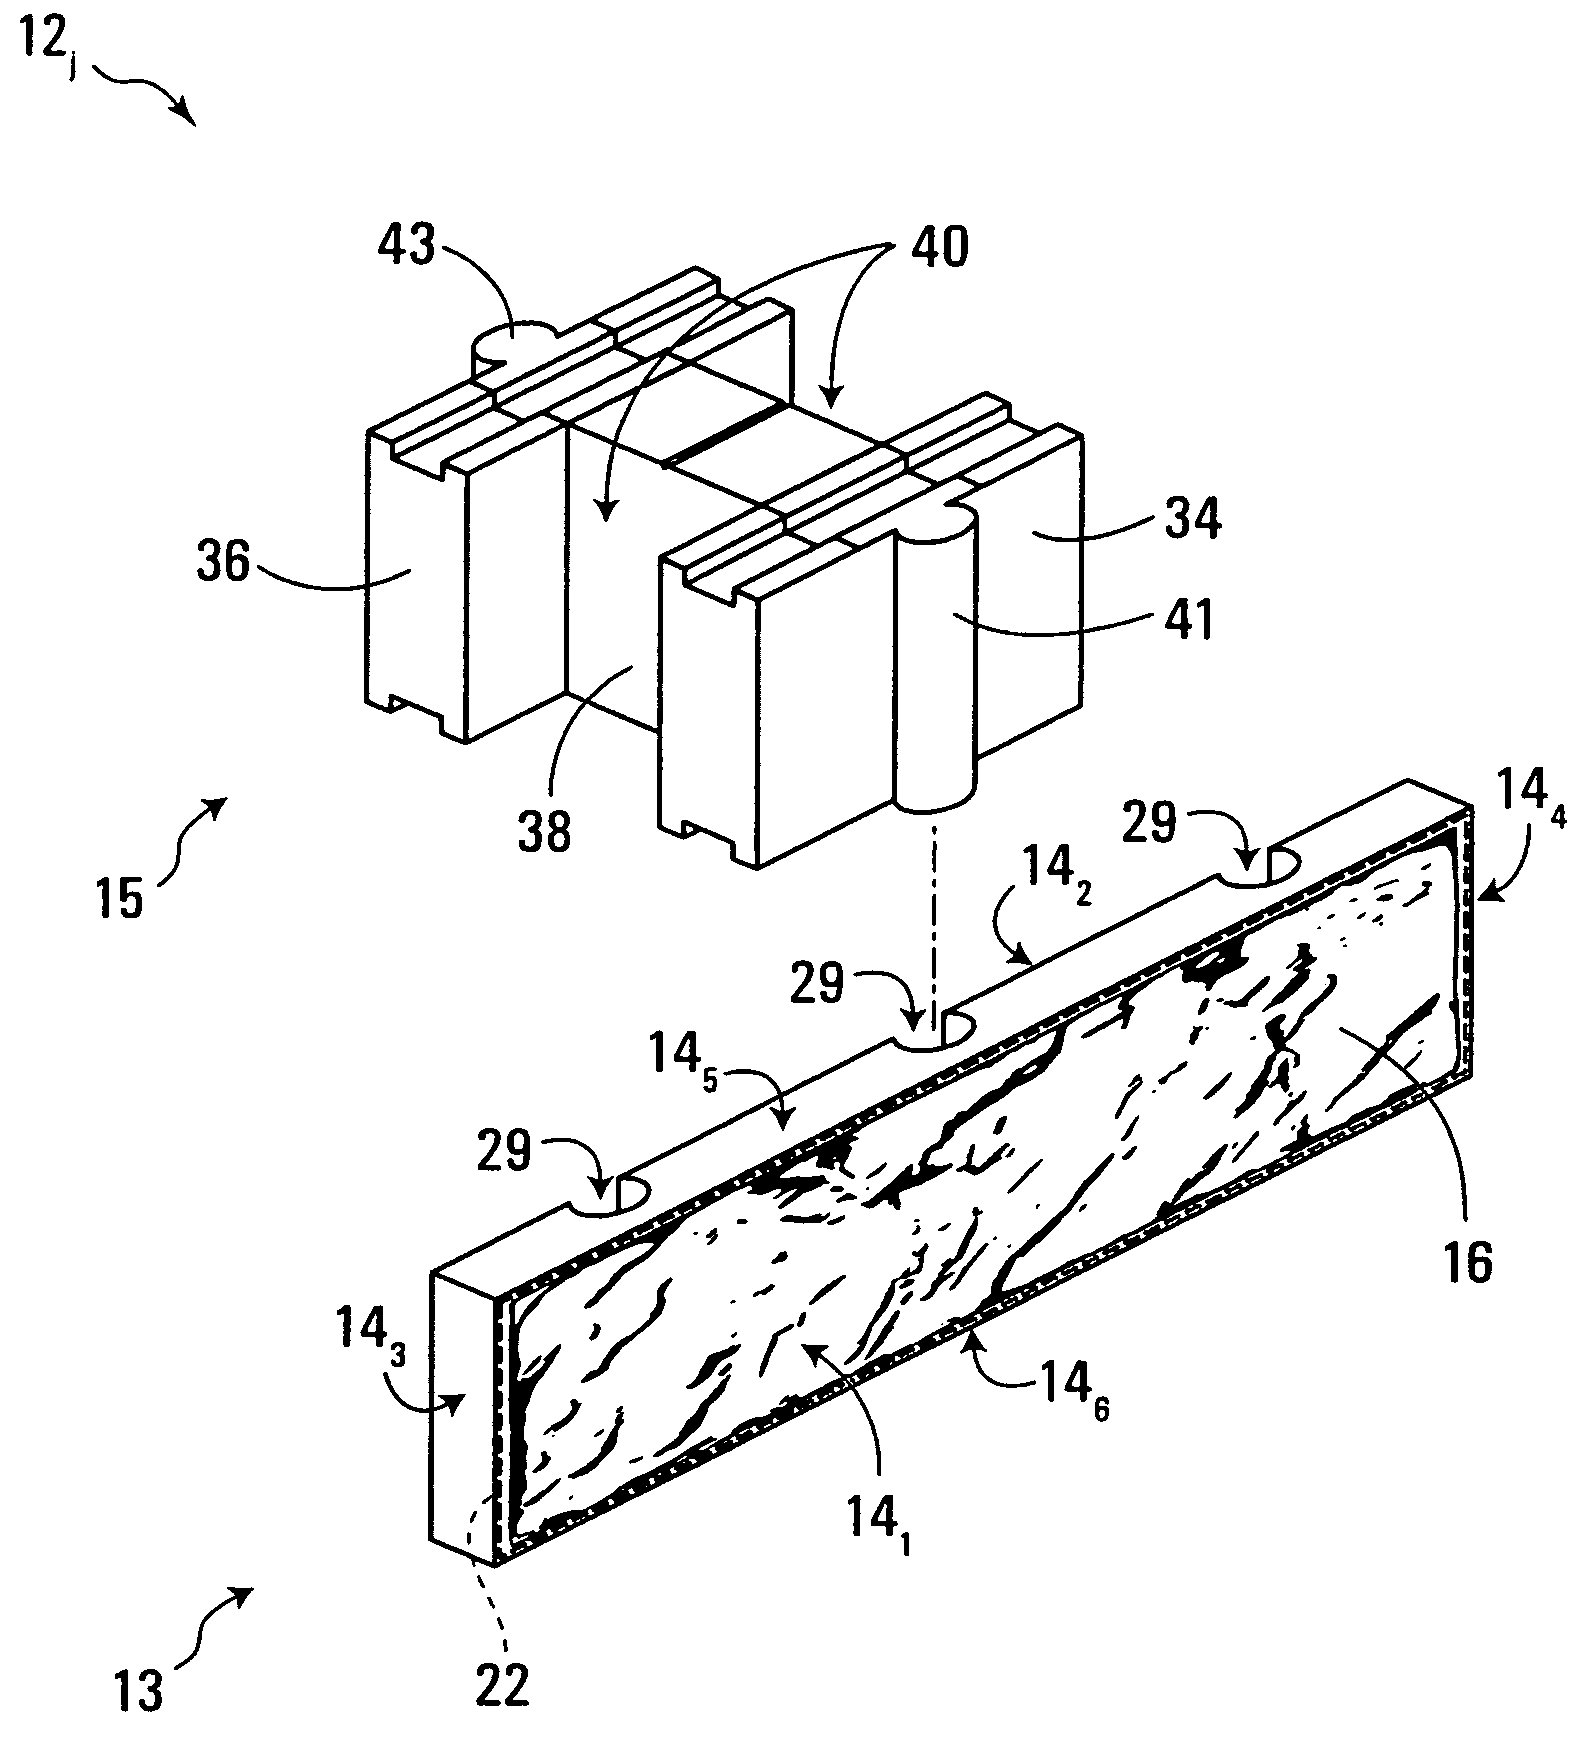 Concrete block system